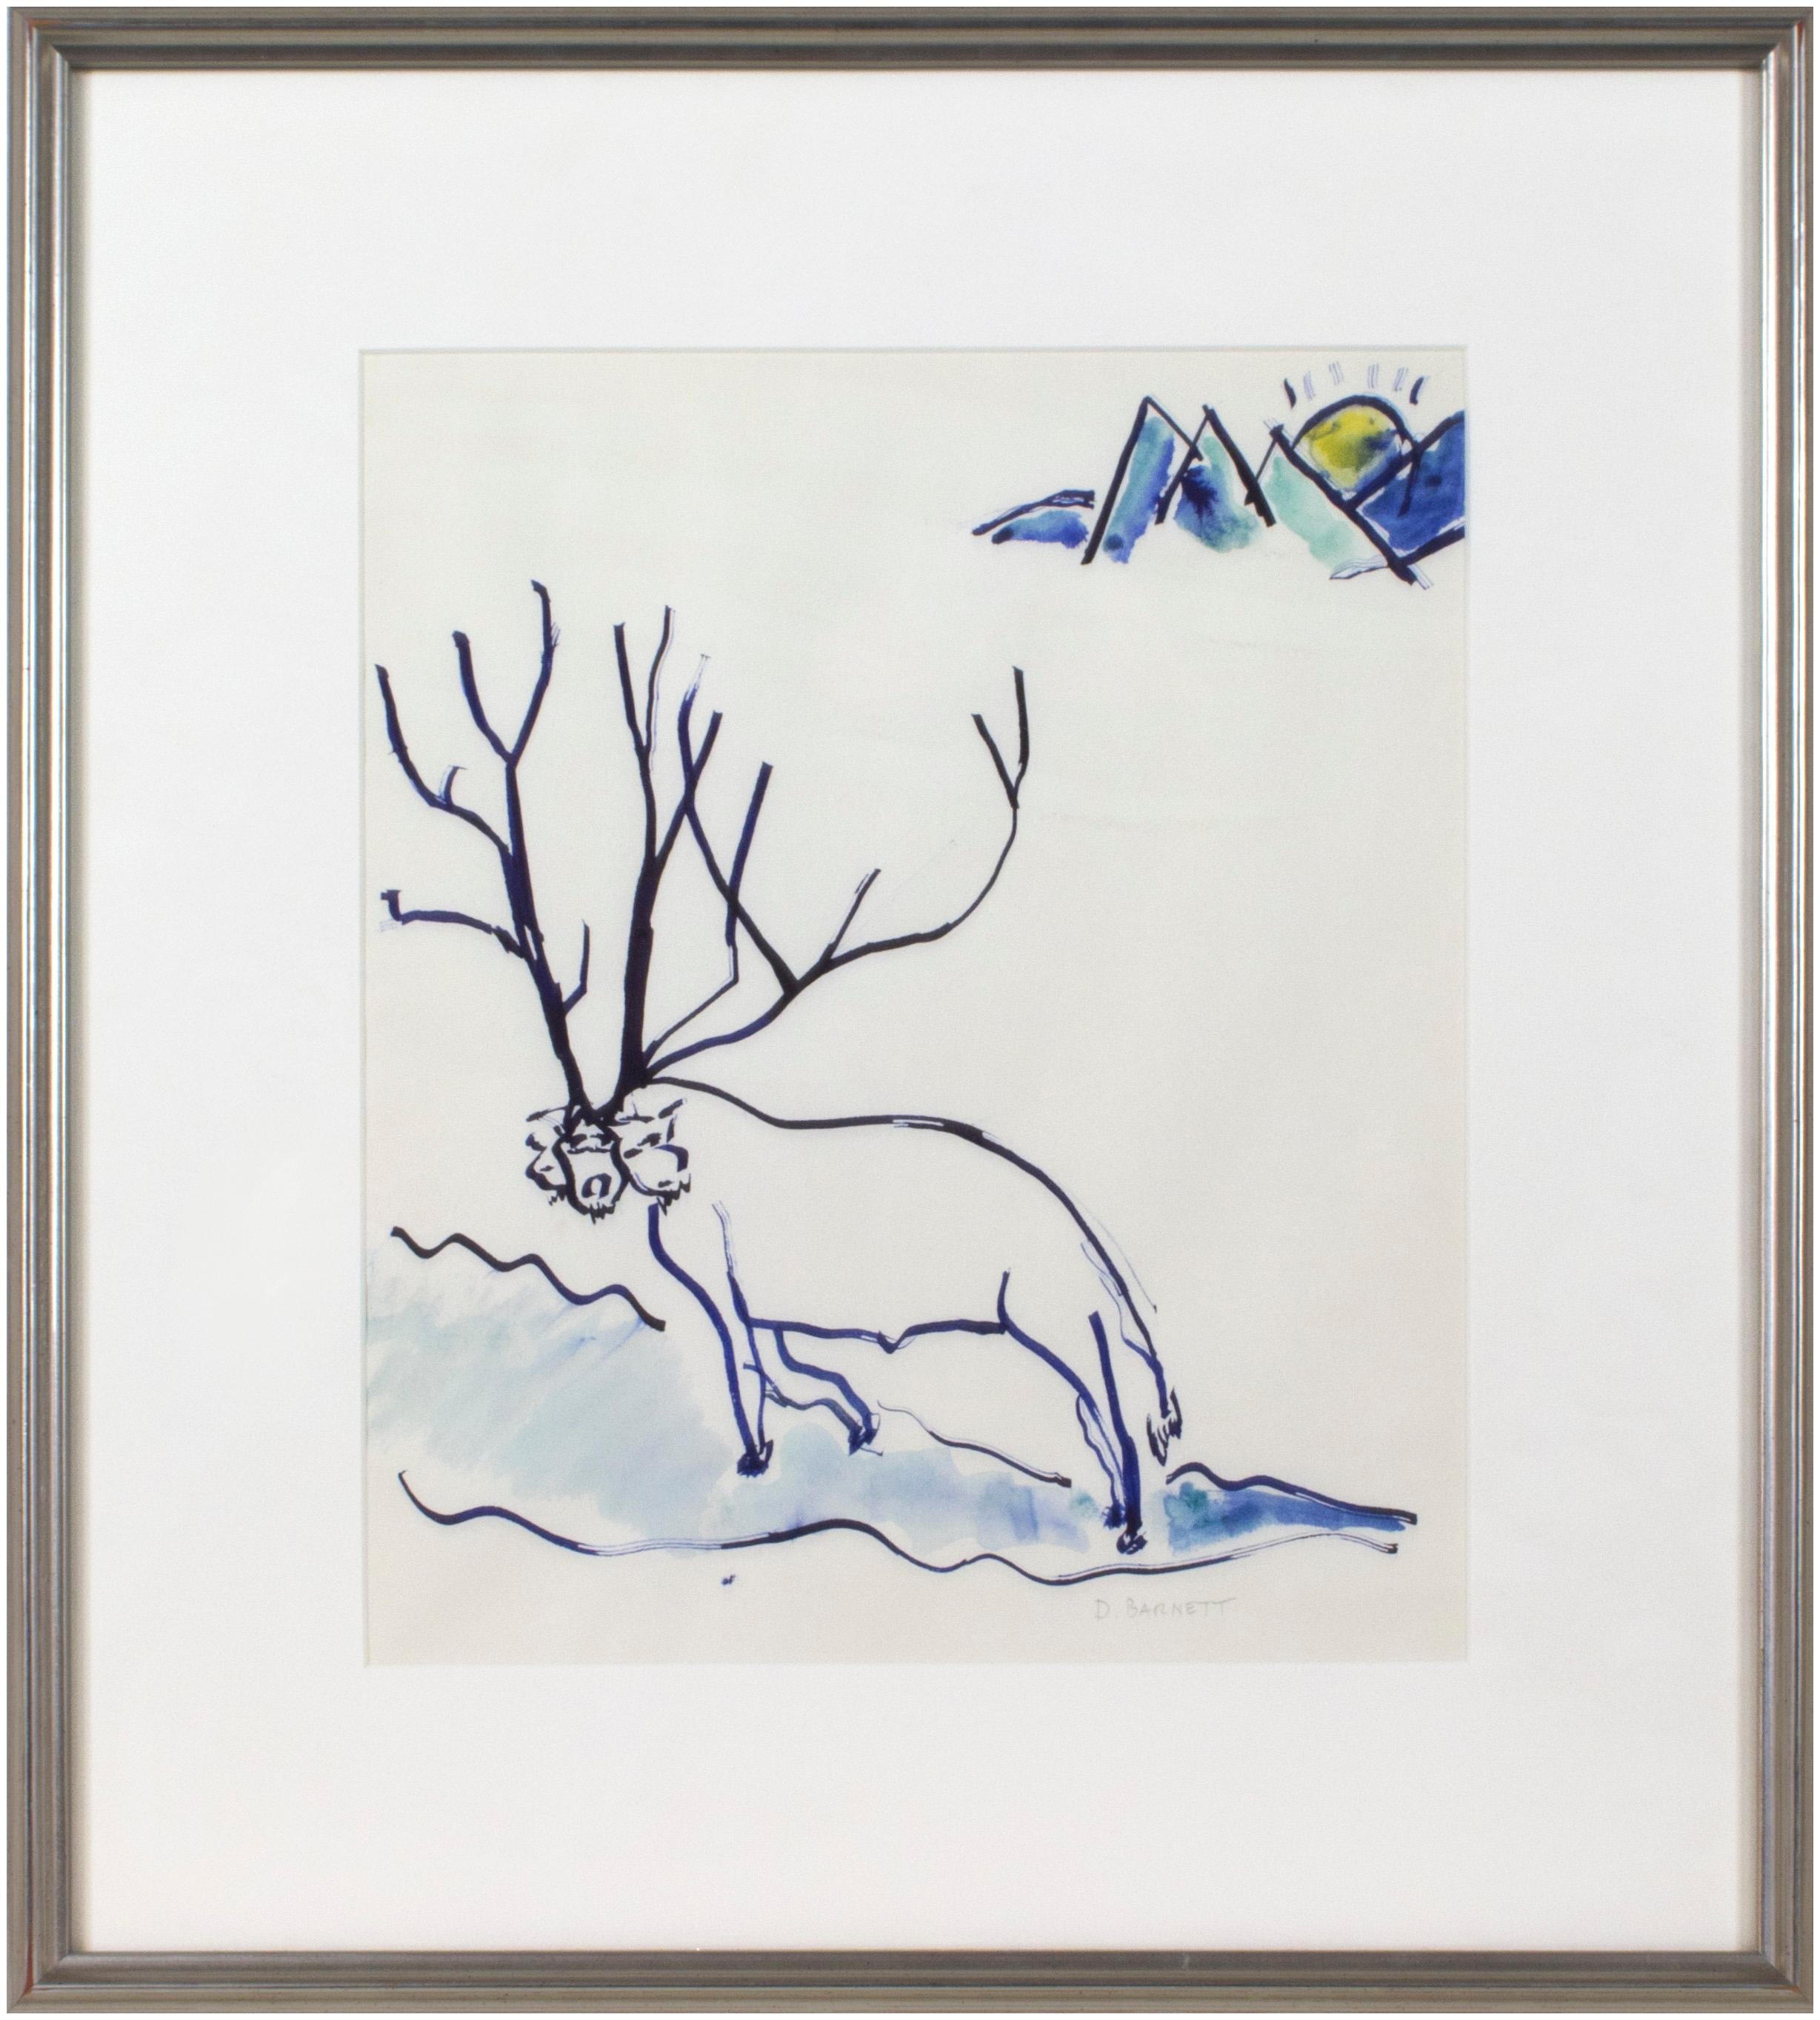 David Barnett Animal Art - 'Reindeer' original signed watercolor painting, winter ice mountains reindeer